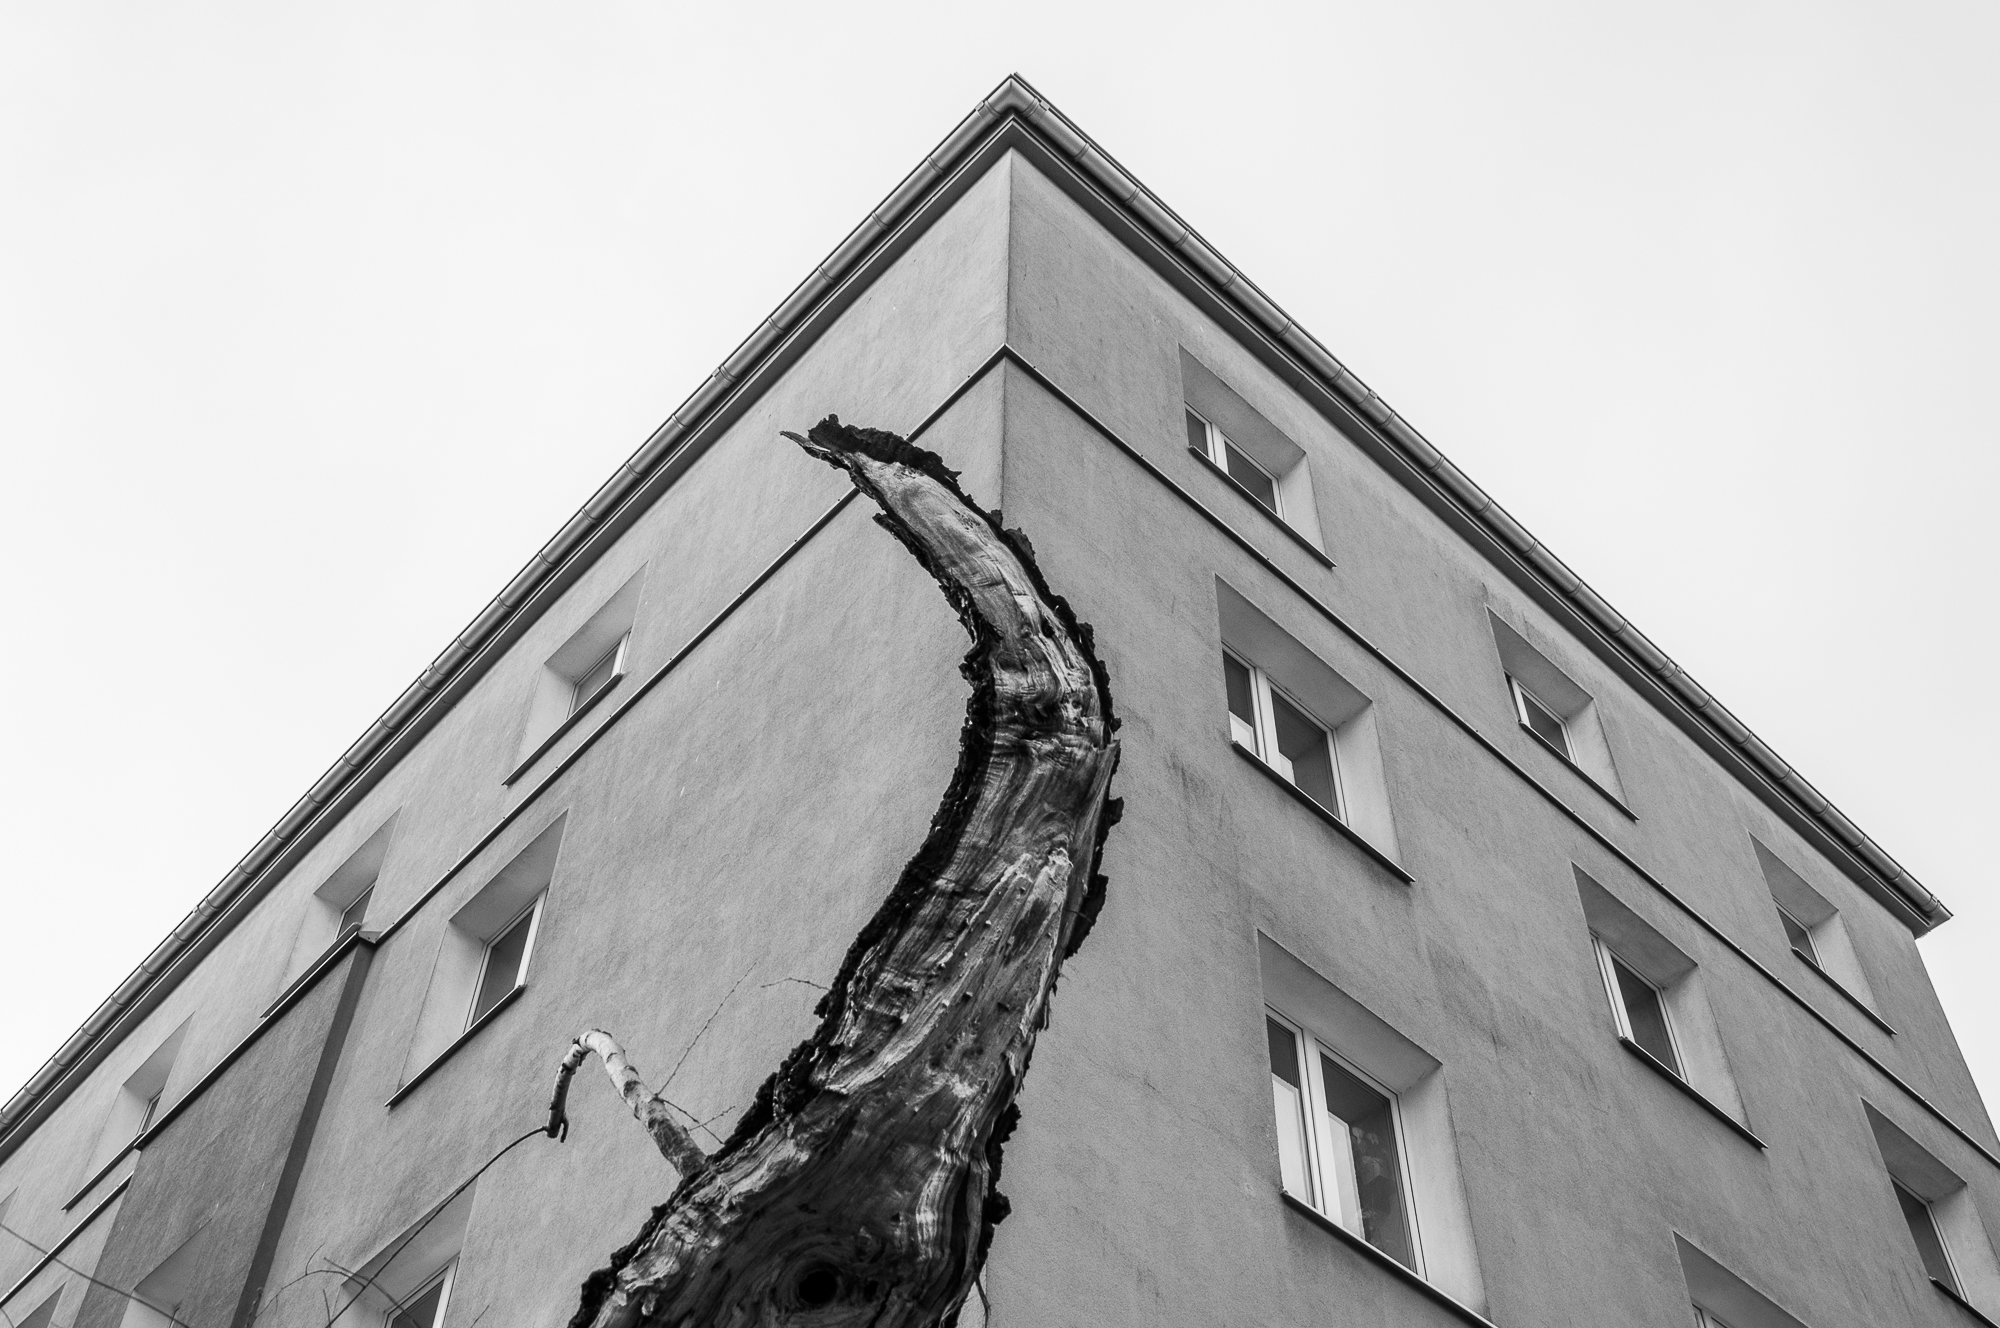 Adam Mazek Photography Warsaw (Warszawa) 2020. Post: "Dangers of using applications." Minimalism, part 32. Perspective.